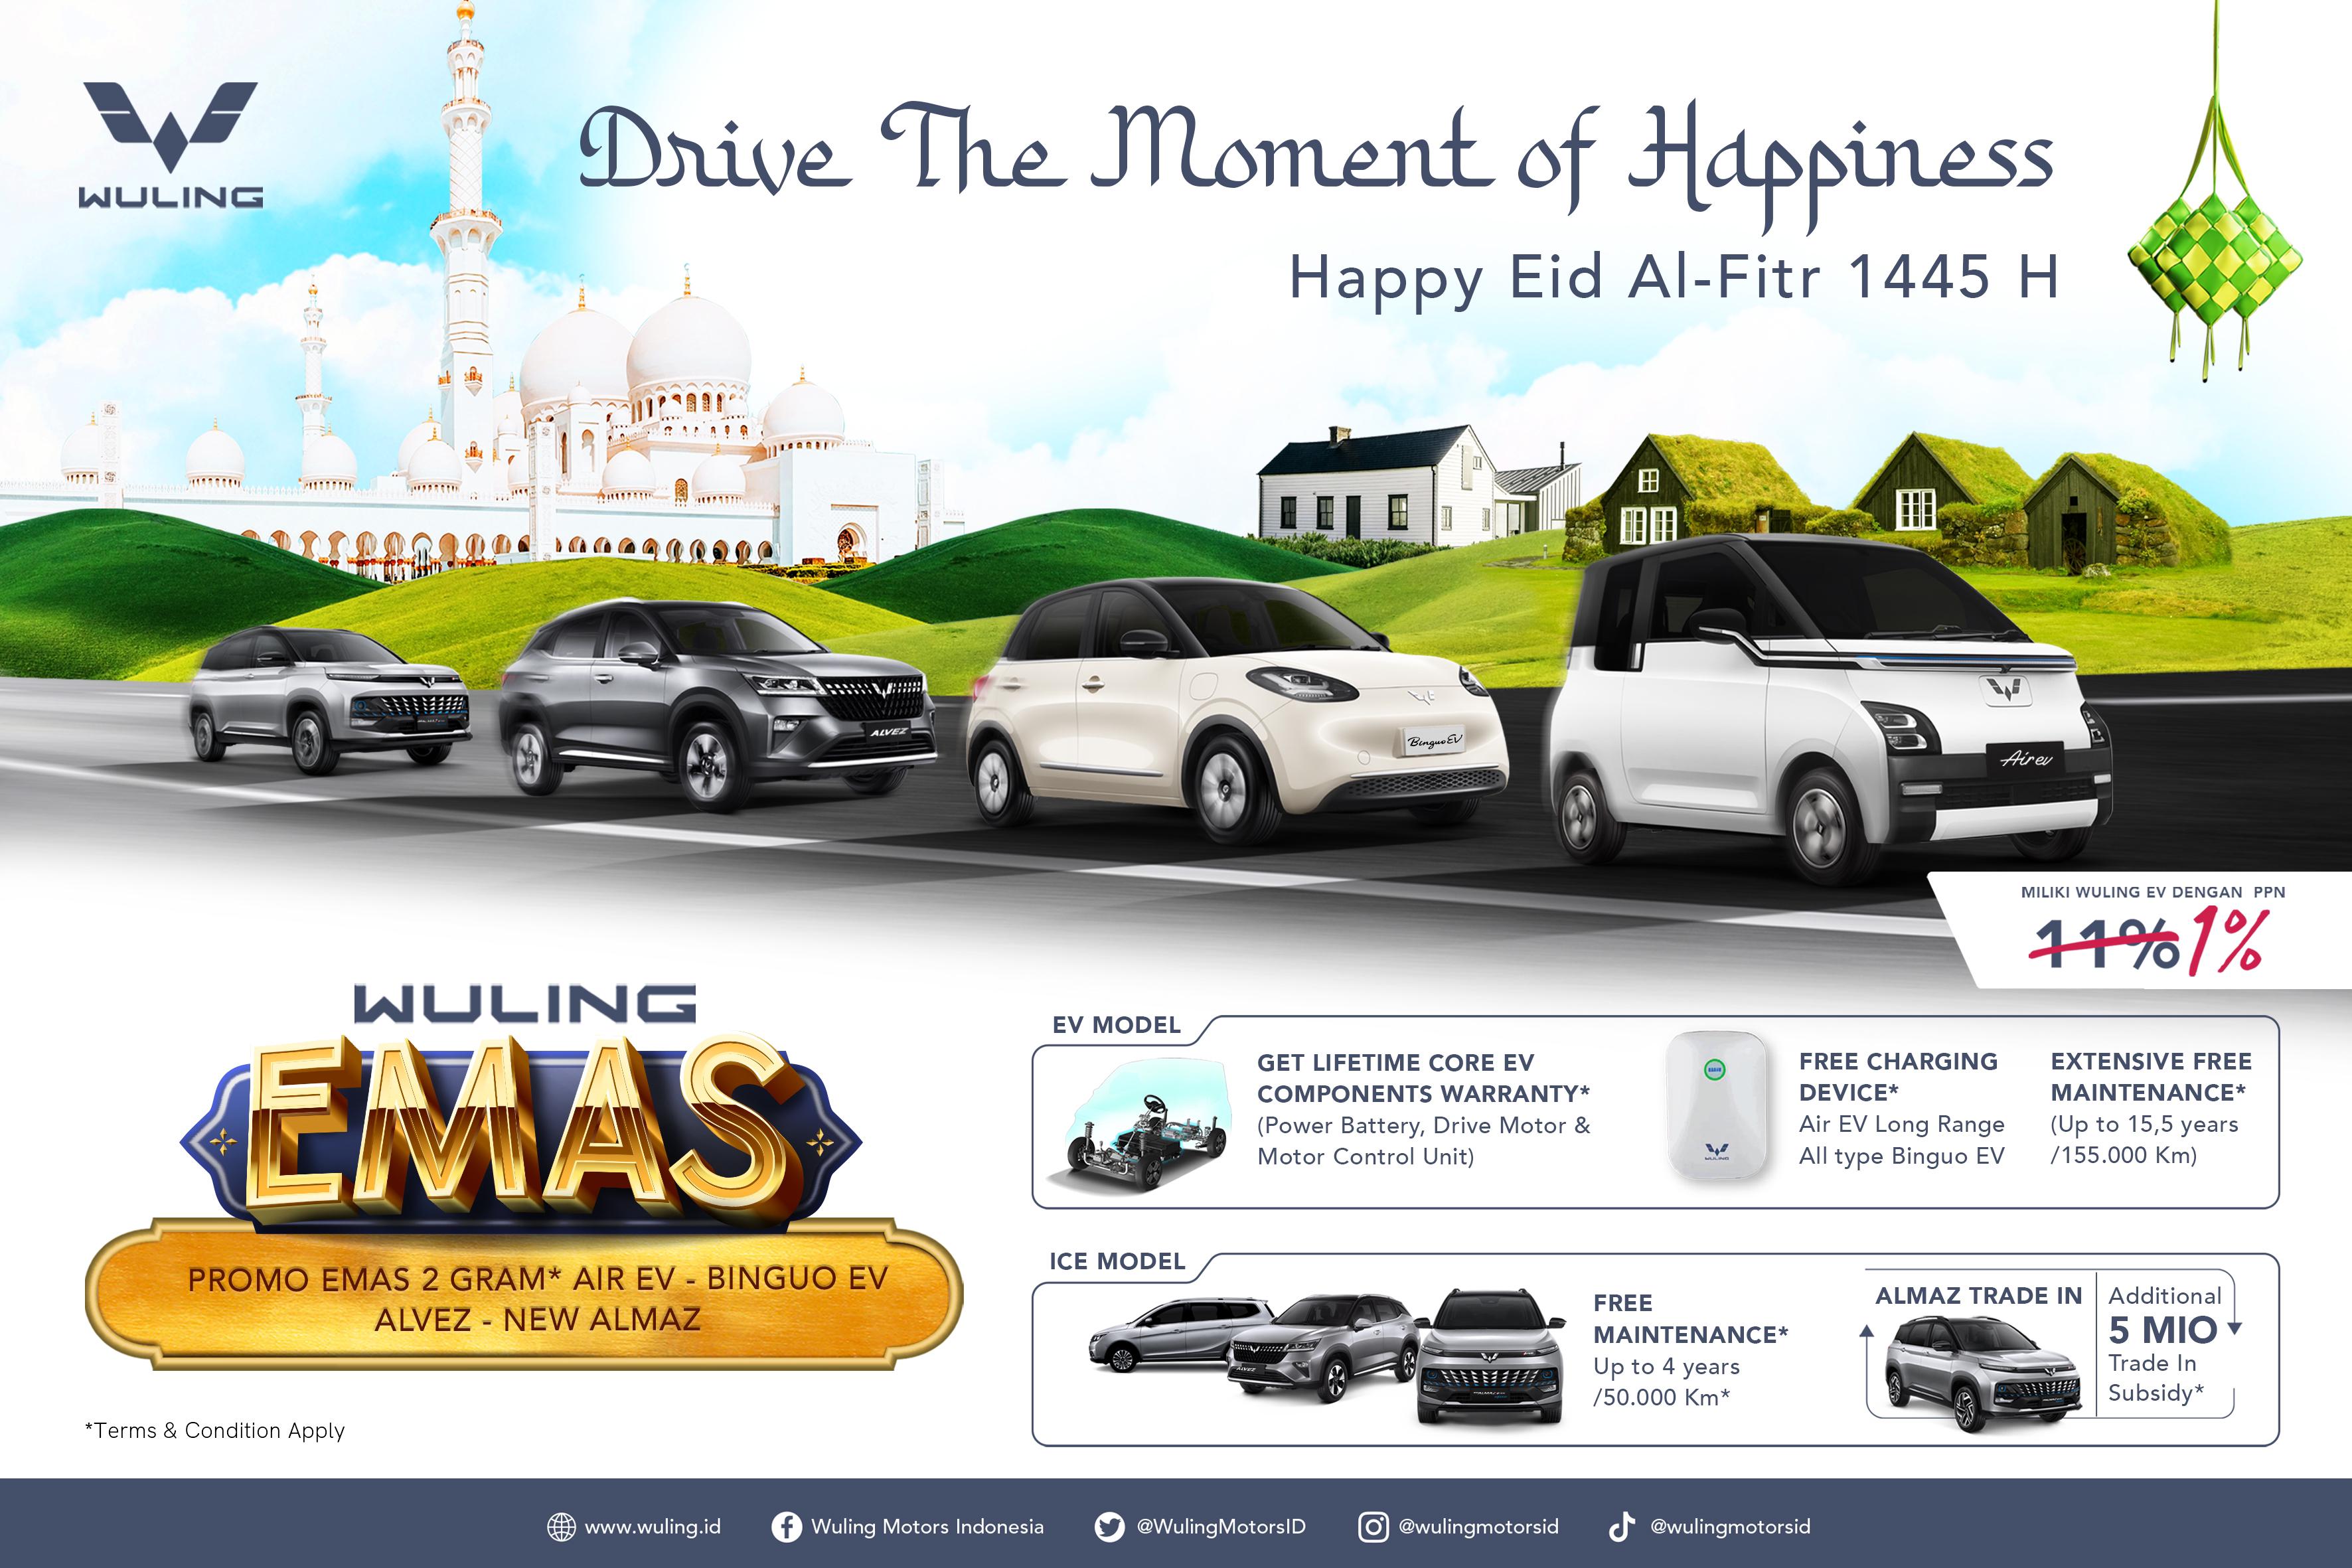 Image Wuling Celebrates Eid Mubarak Through Drive The Moment of Happiness